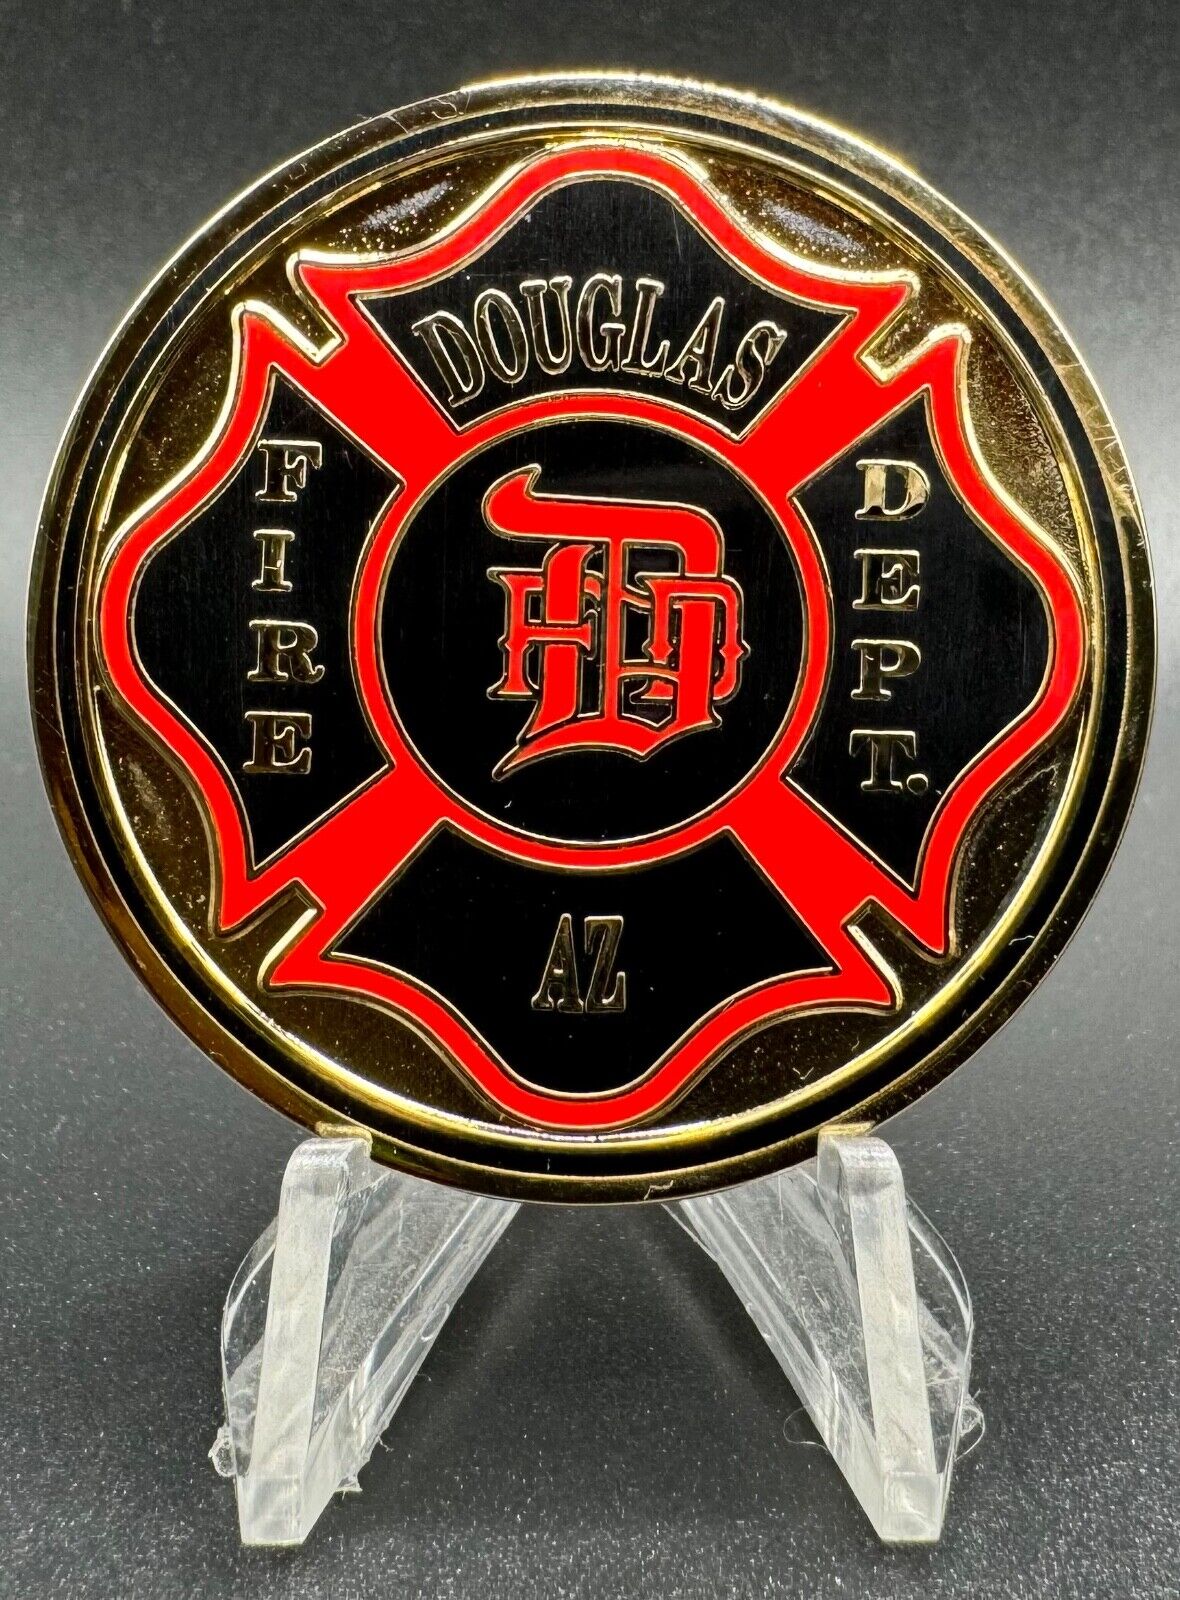 Douglas Arizona Fire Department Fireman Man of Courage Rare Challenge Coin